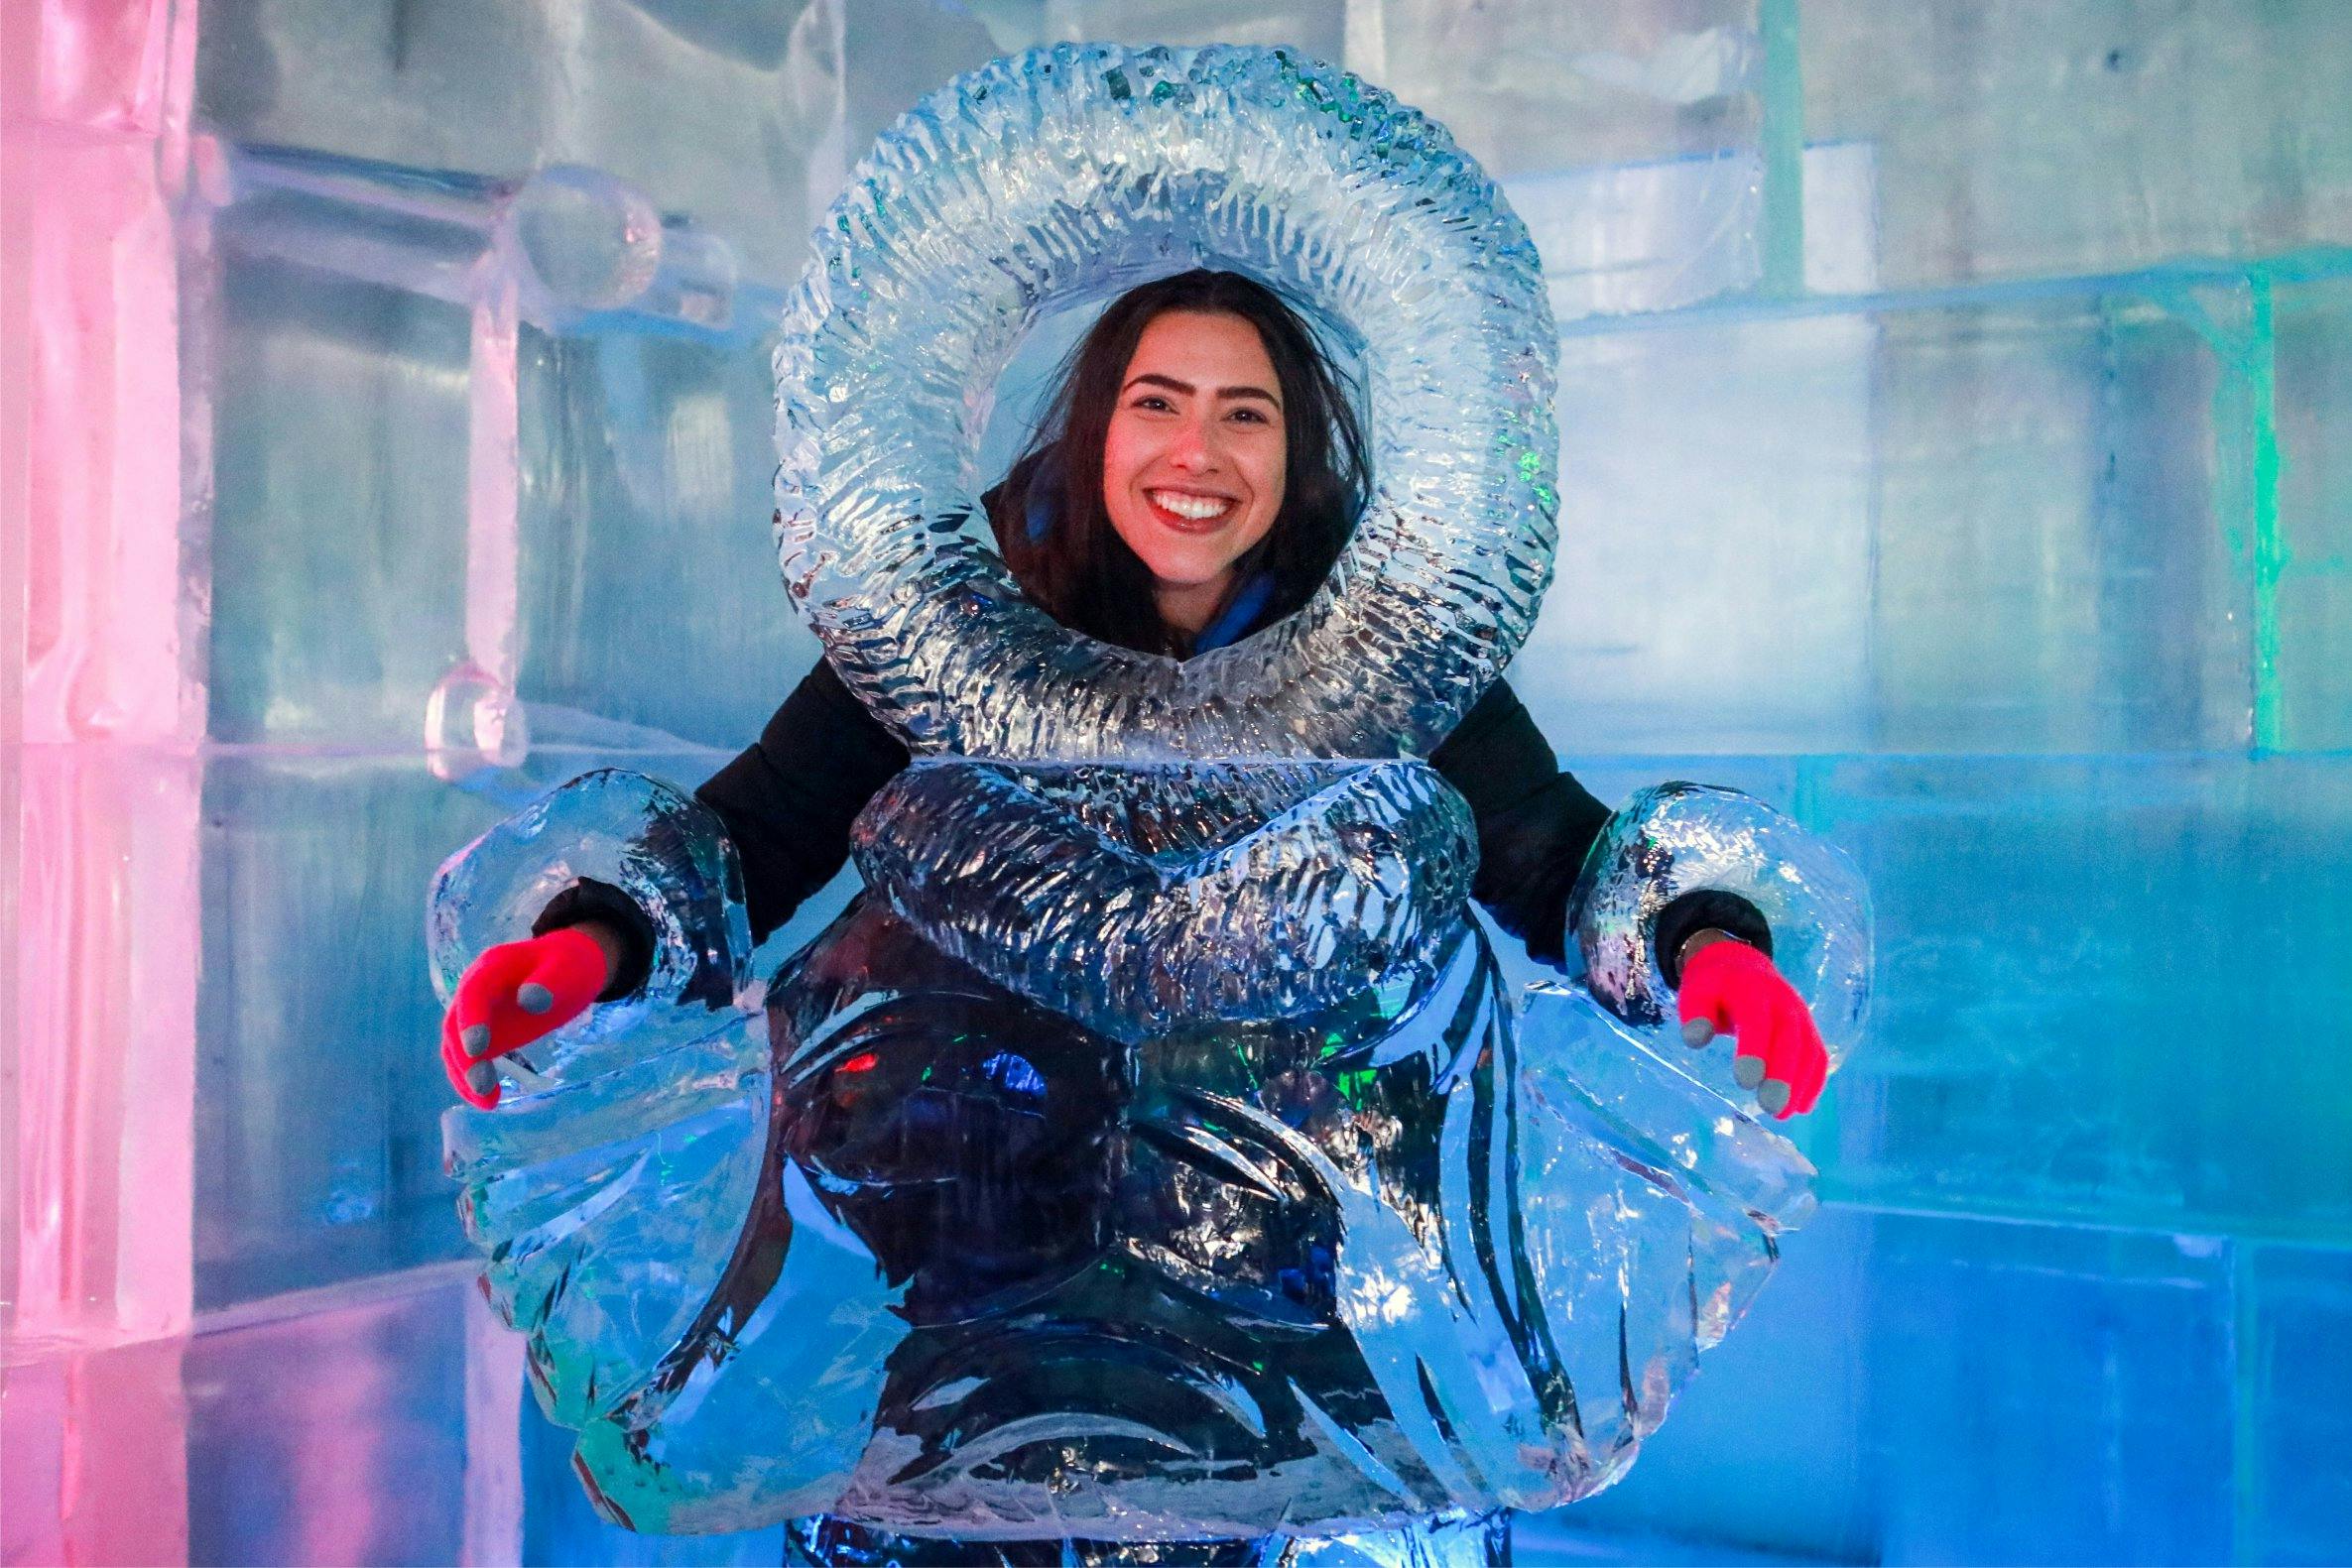 Smiling woman posing with ice sculpture in Below Zero